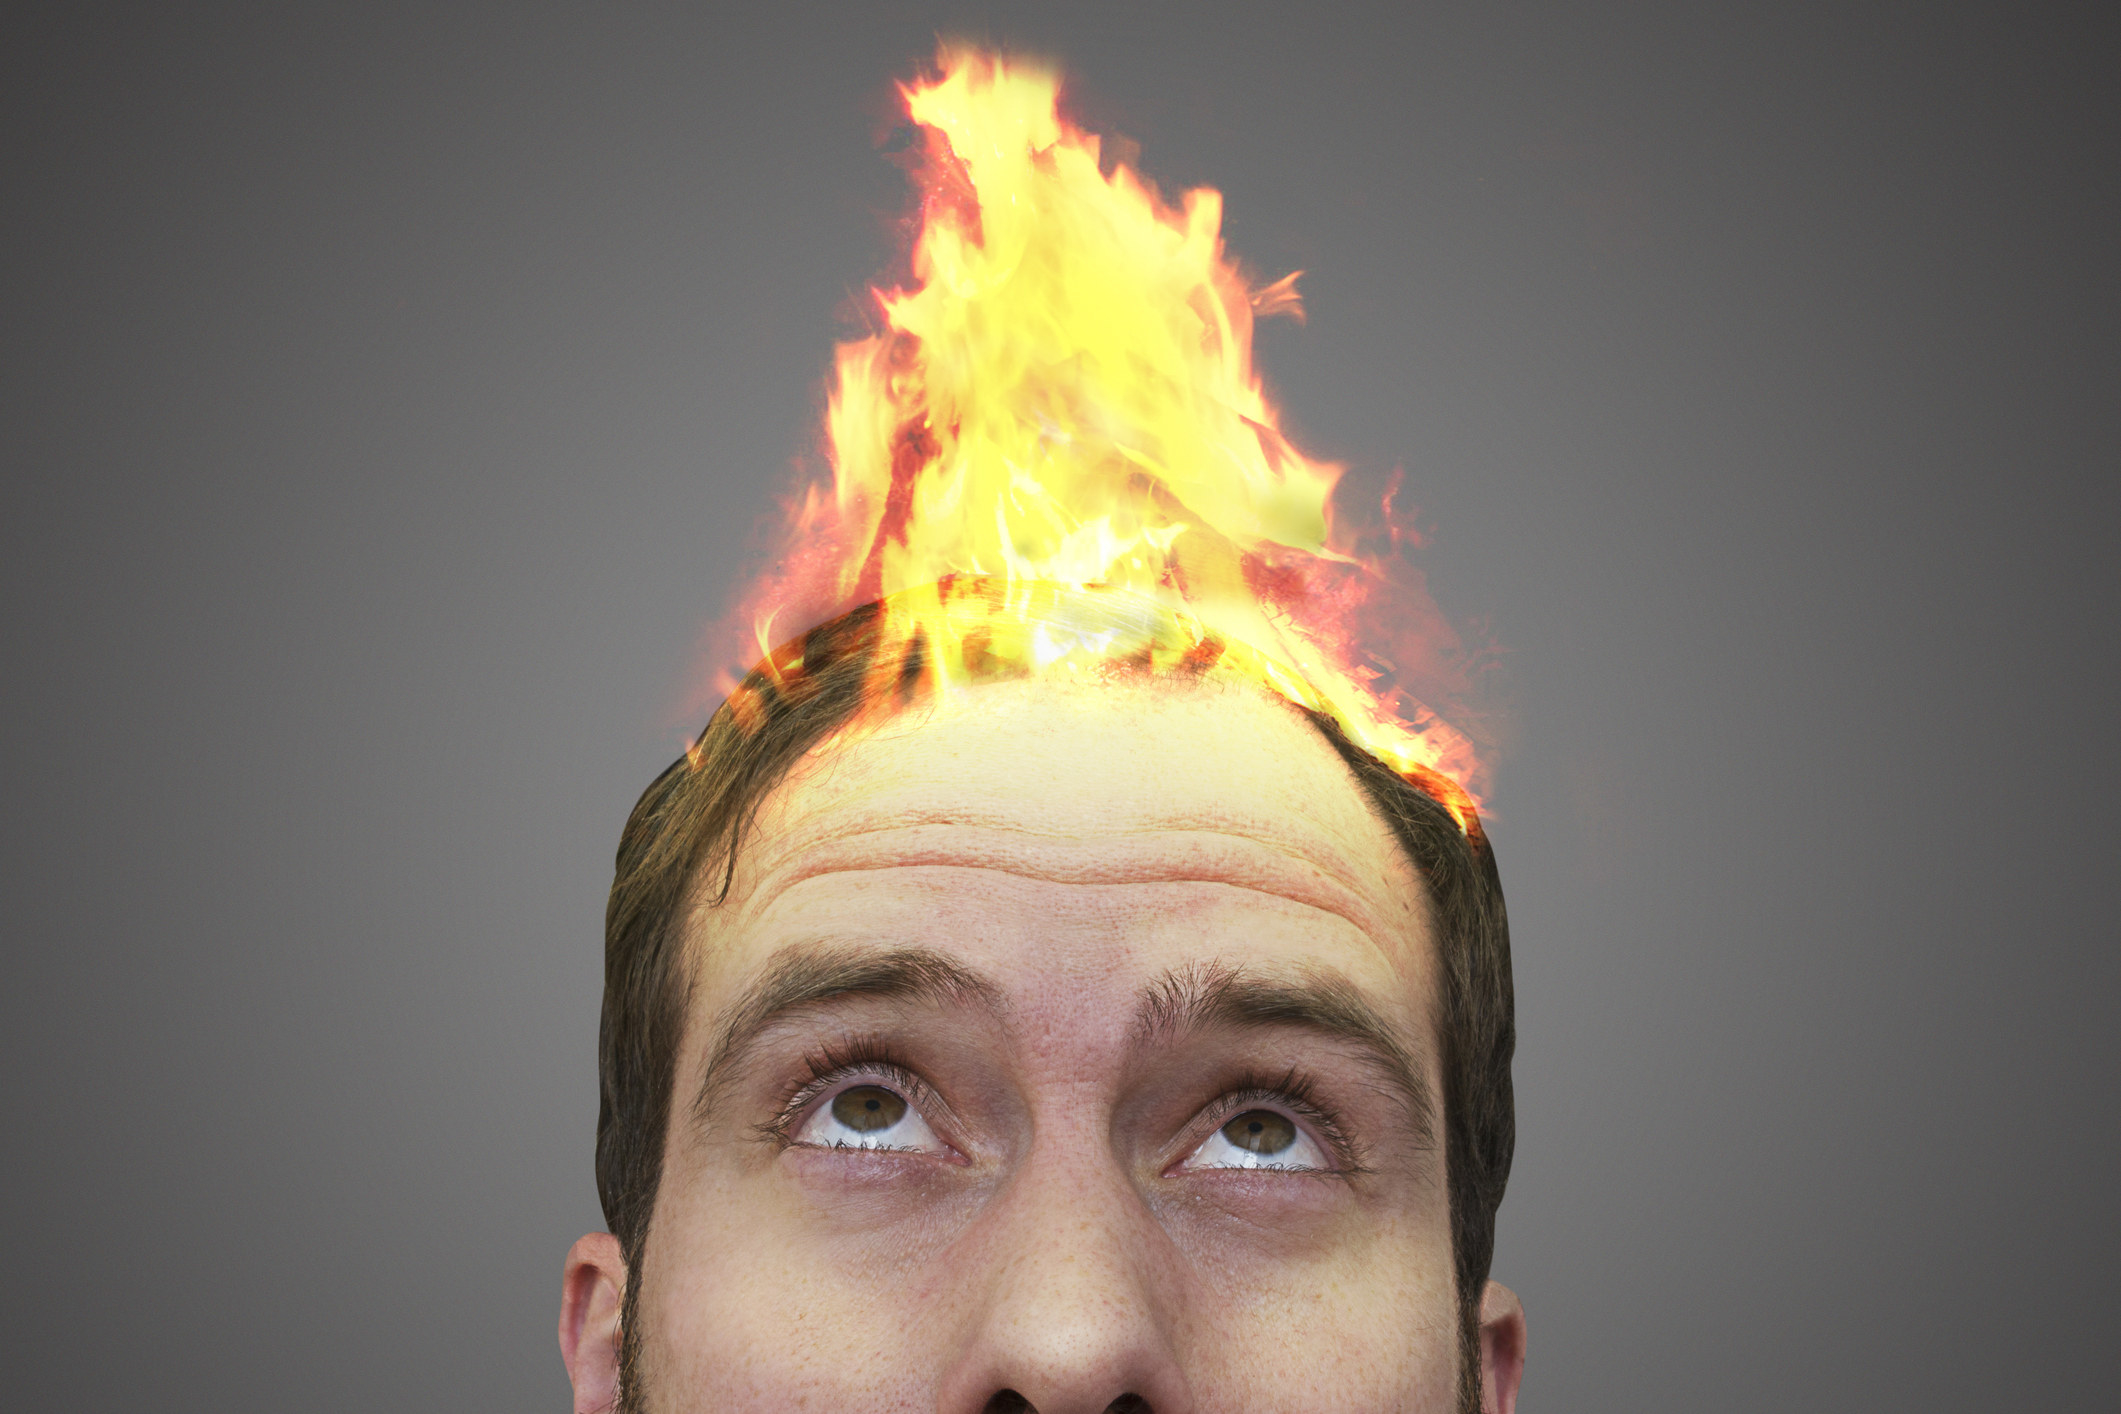 A man&#x27;s head on fire